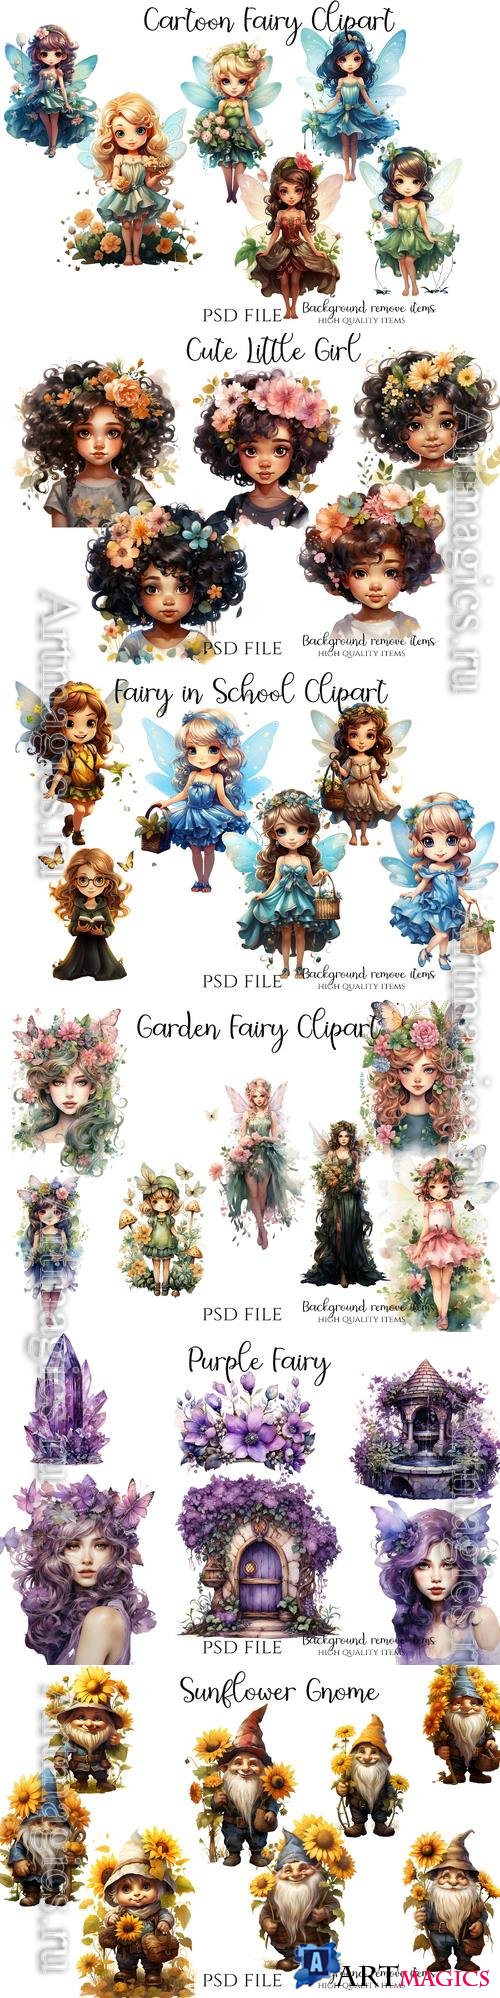 Cartoon fairy, cute little girl character, purple graphic fairy, sunflower gnome, garden fairy - PSD illustration cliparts set